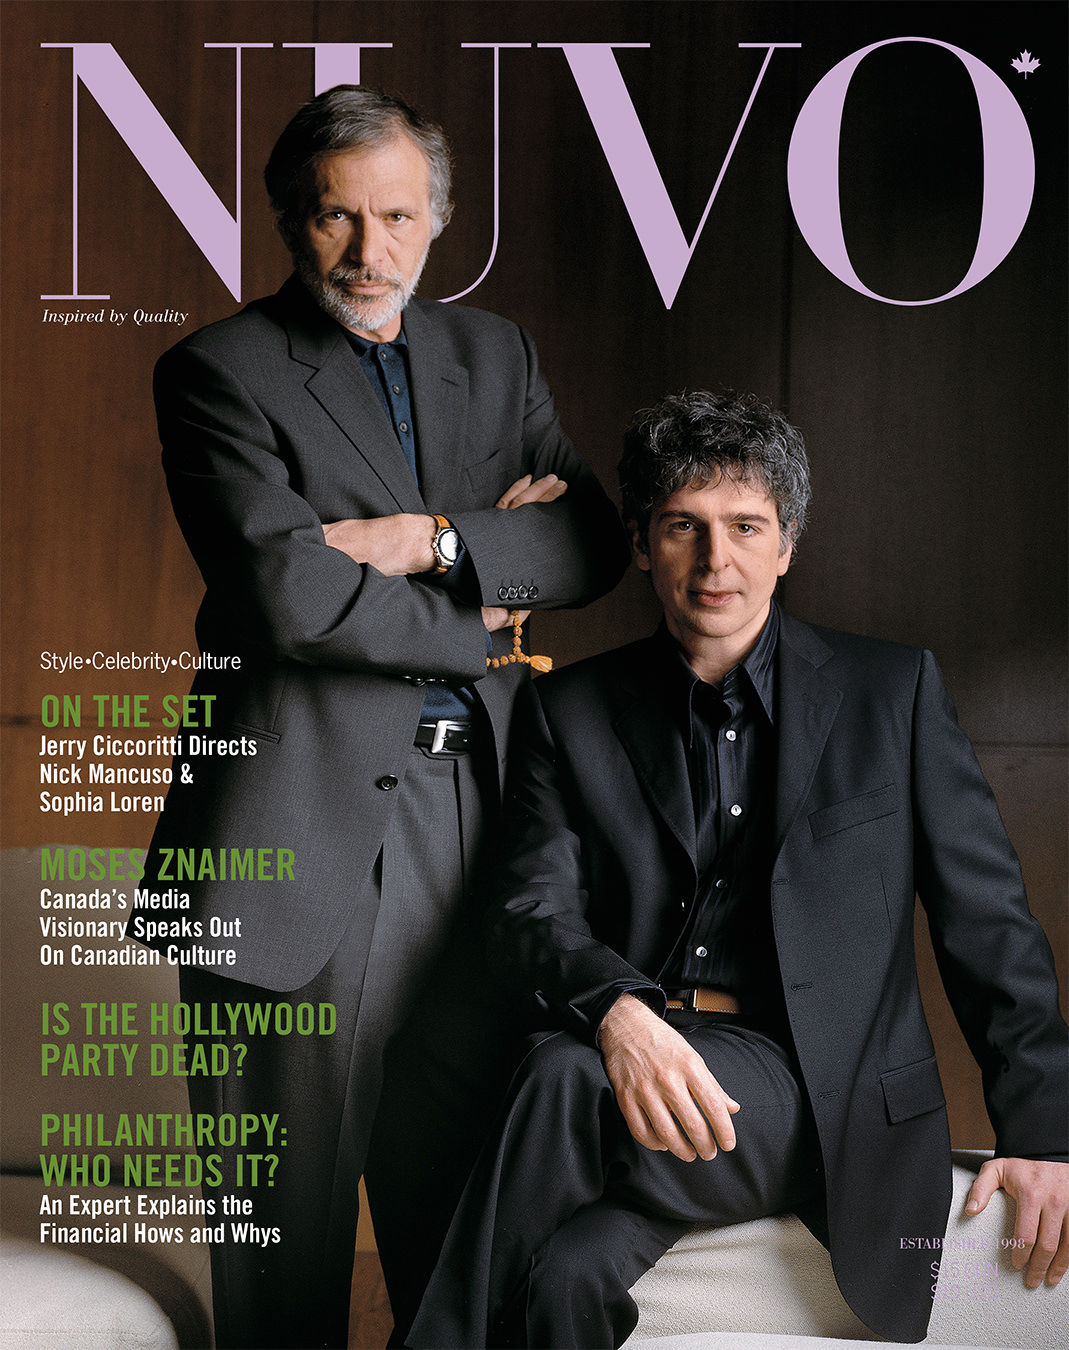 NUVO Magazine Spring 2004 Cover featuring Jerry Ciccoritti and Nick Mancuso